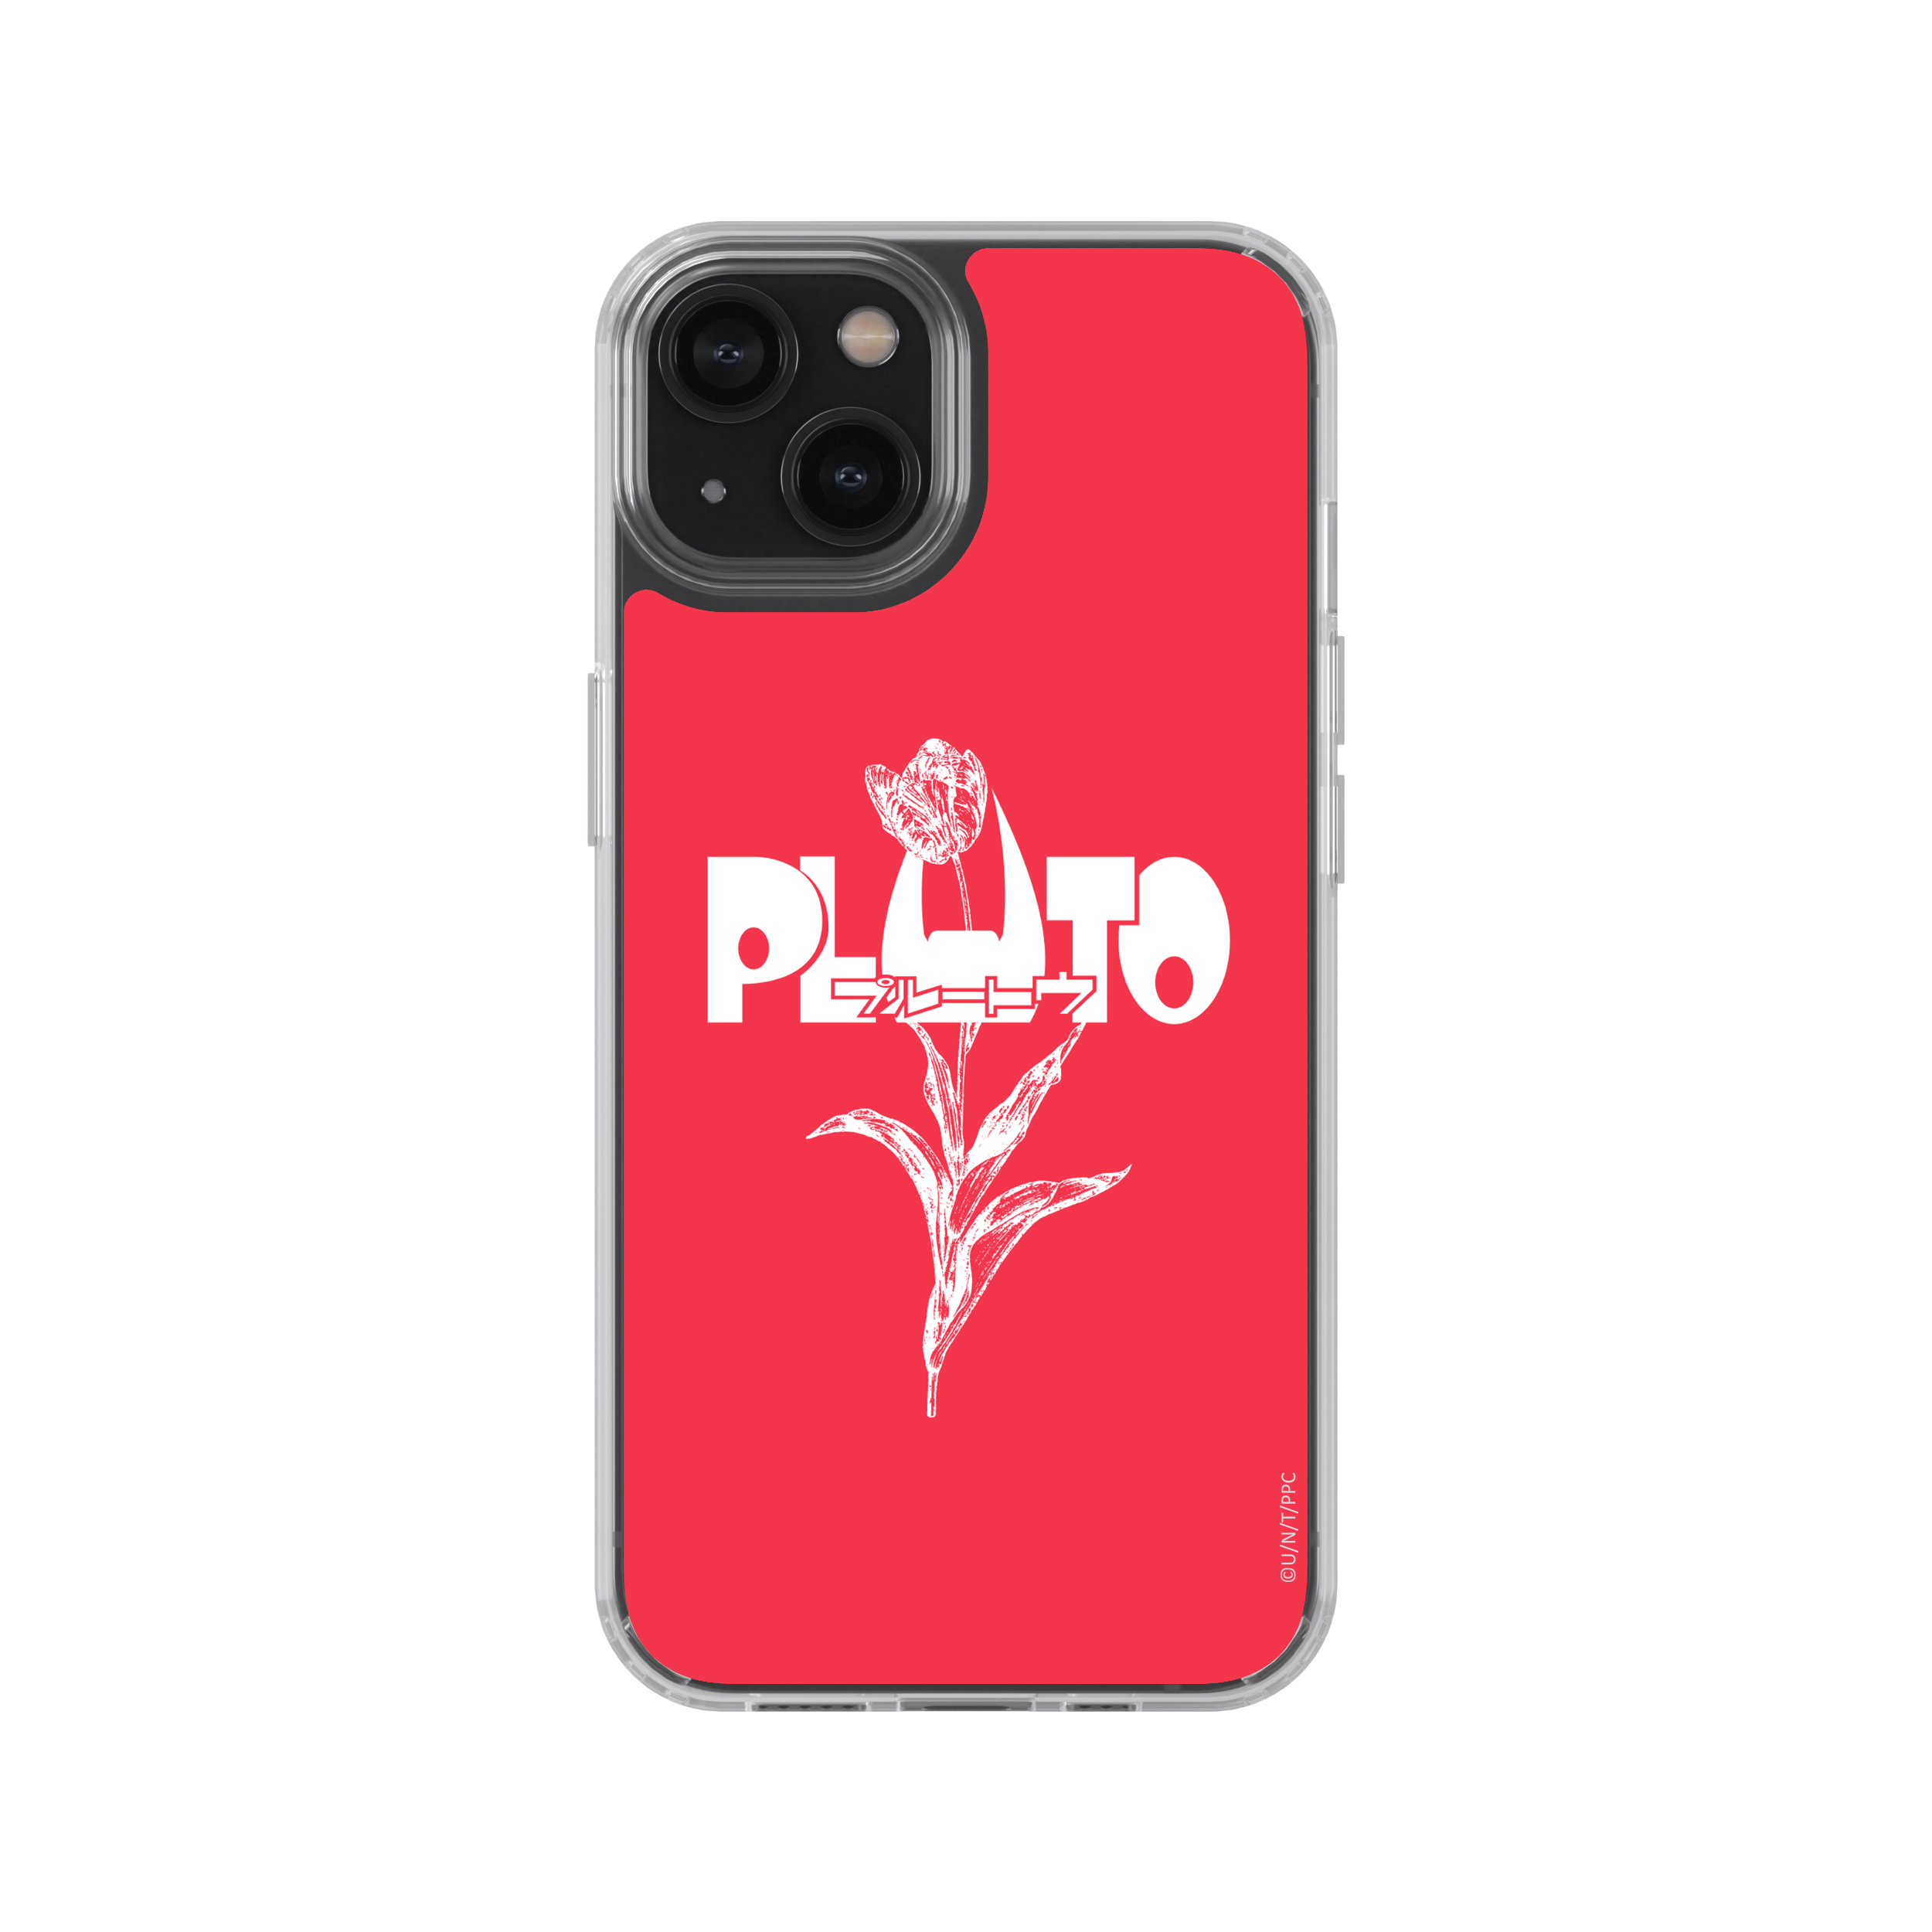 pluto red phone case